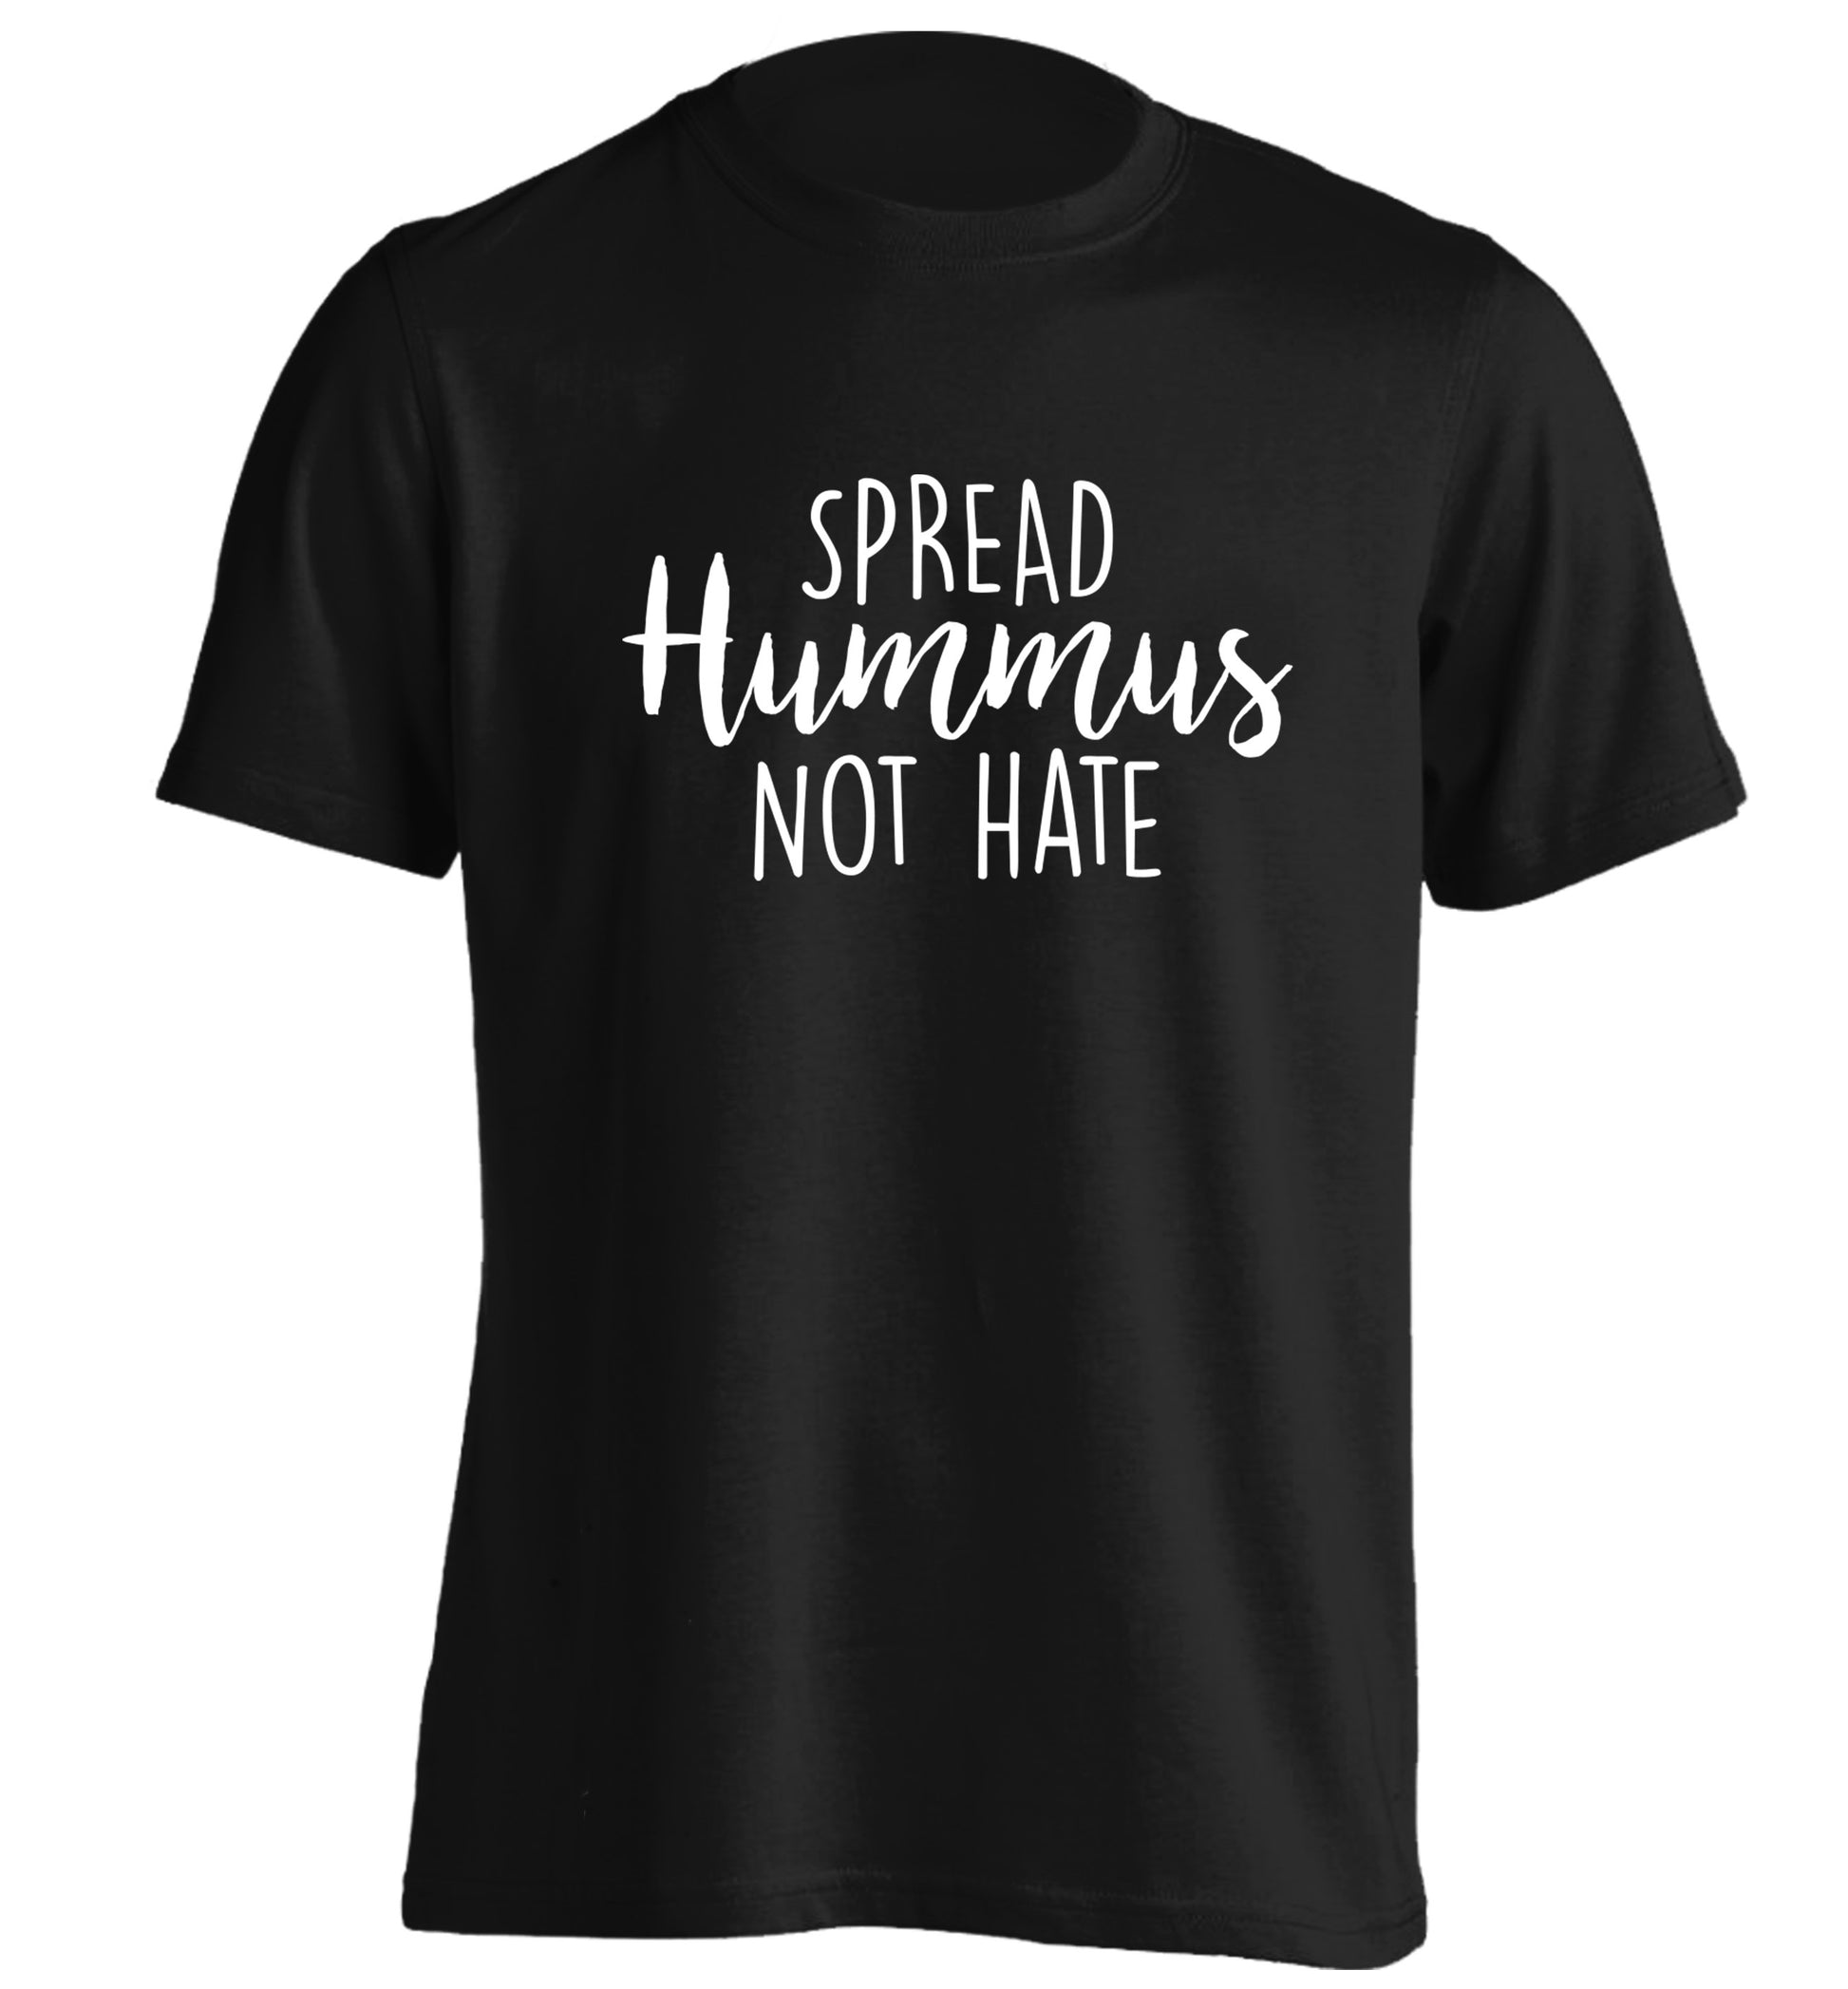 Spread hummus not hate script text adults unisex black Tshirt 2XL